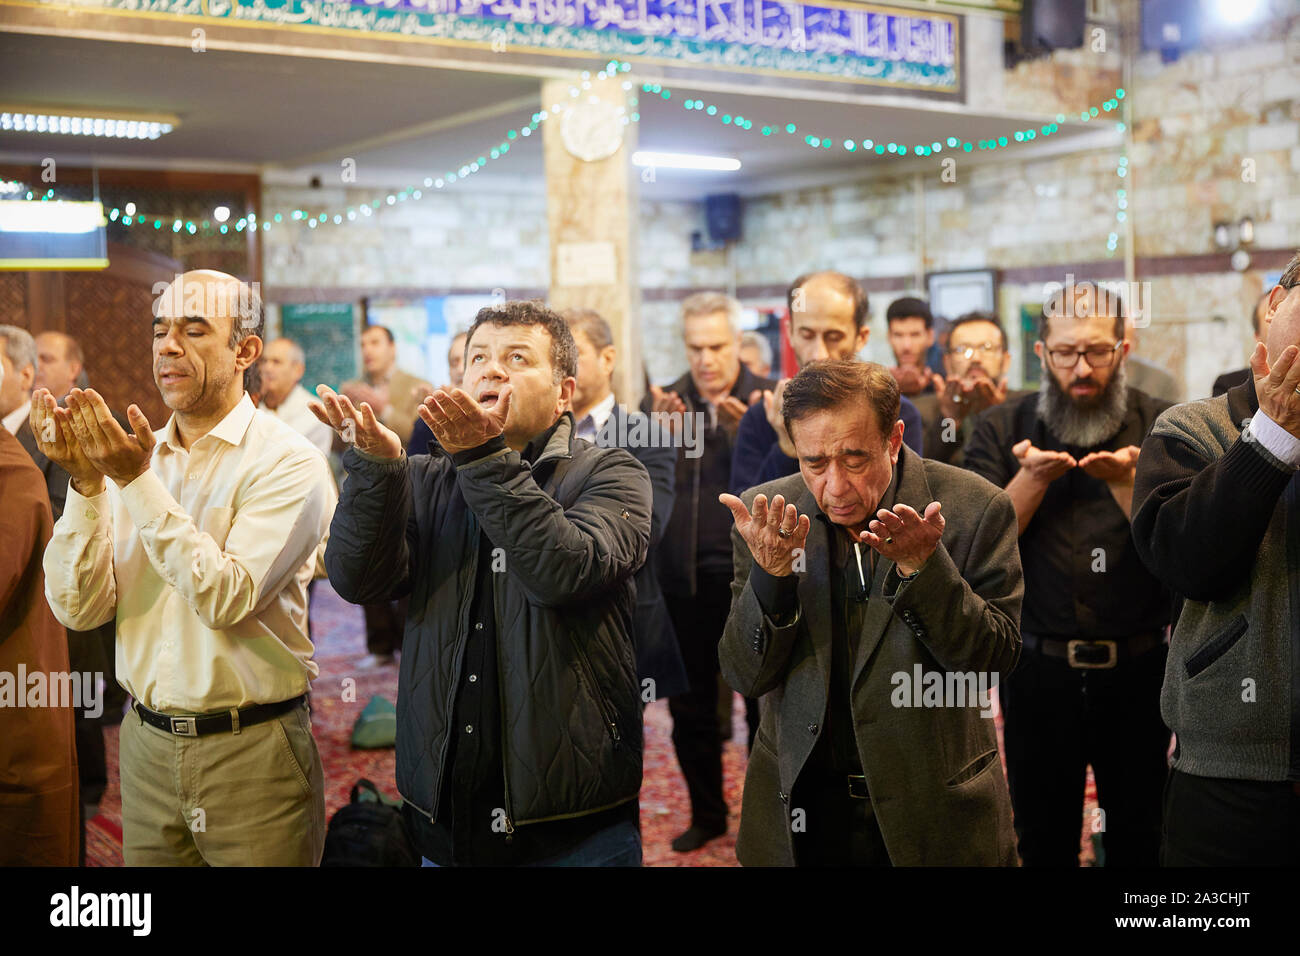 Iran Tehran Mosque Moslim Islam The 8 o clock praying in the mosque, the man part 01-04-2017 foto: Jaco Klamer Stock Photo